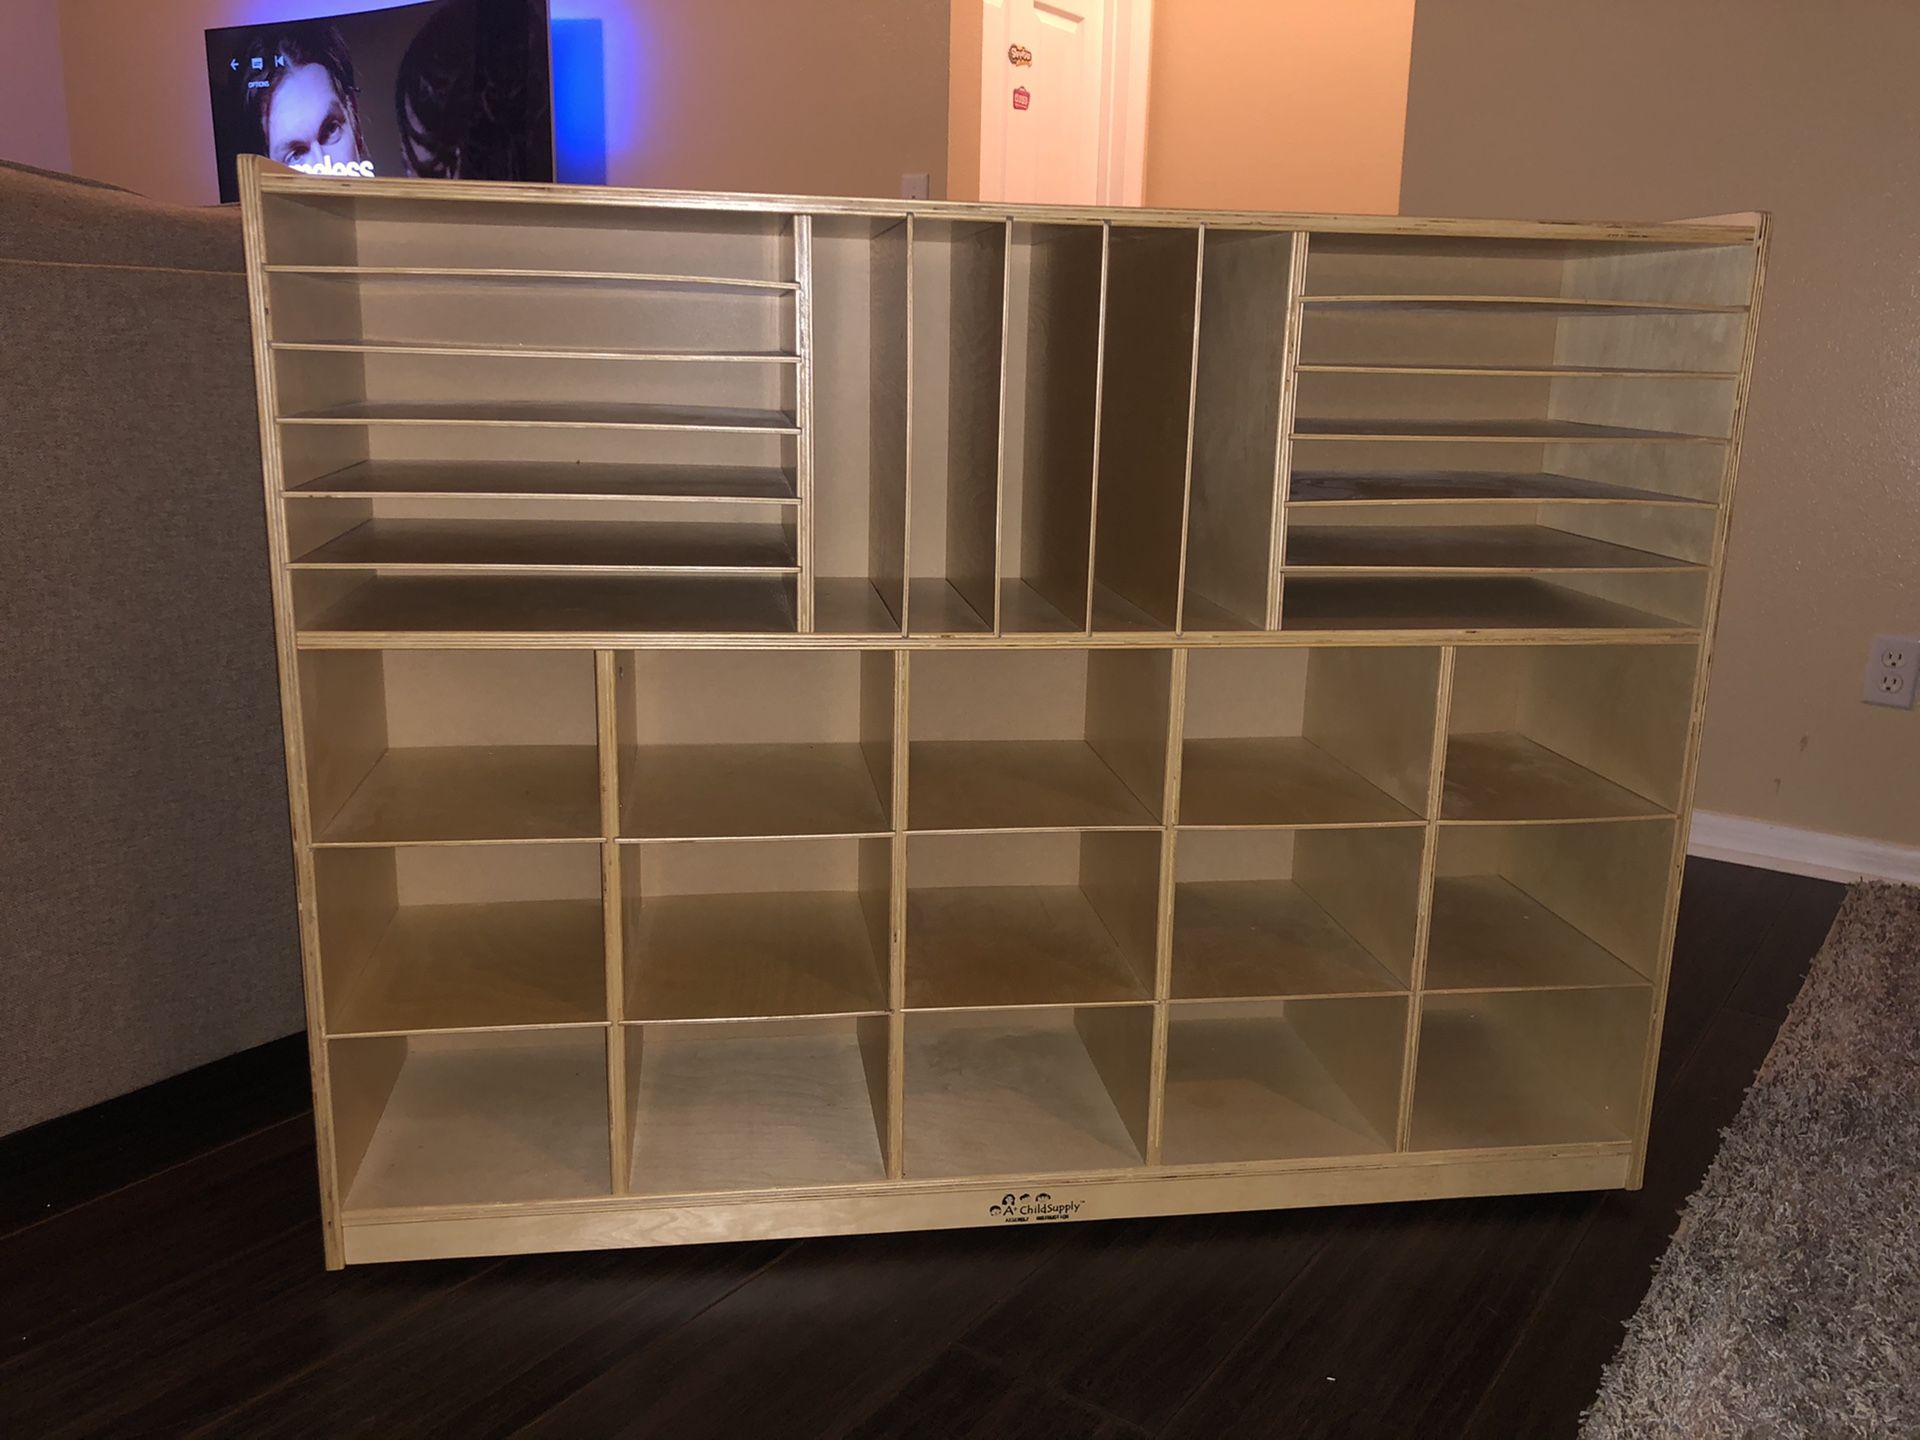 Shelf organizer/ Art Organizer